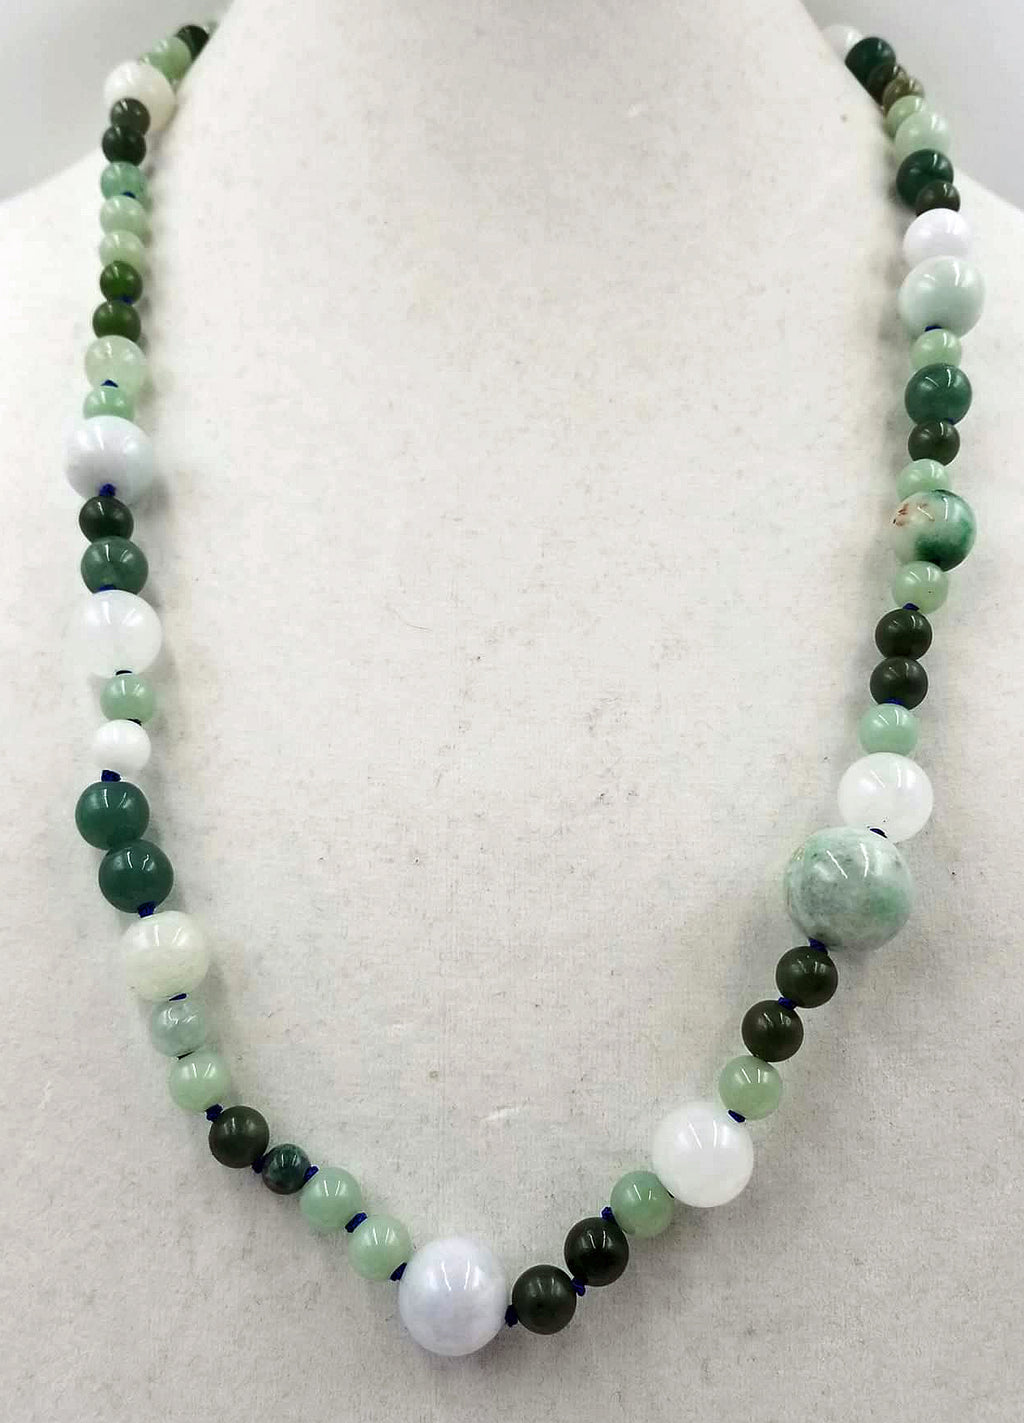 Classic. Green & white jadeite, nephrite necklace on silk. 27" MatineeClass length.